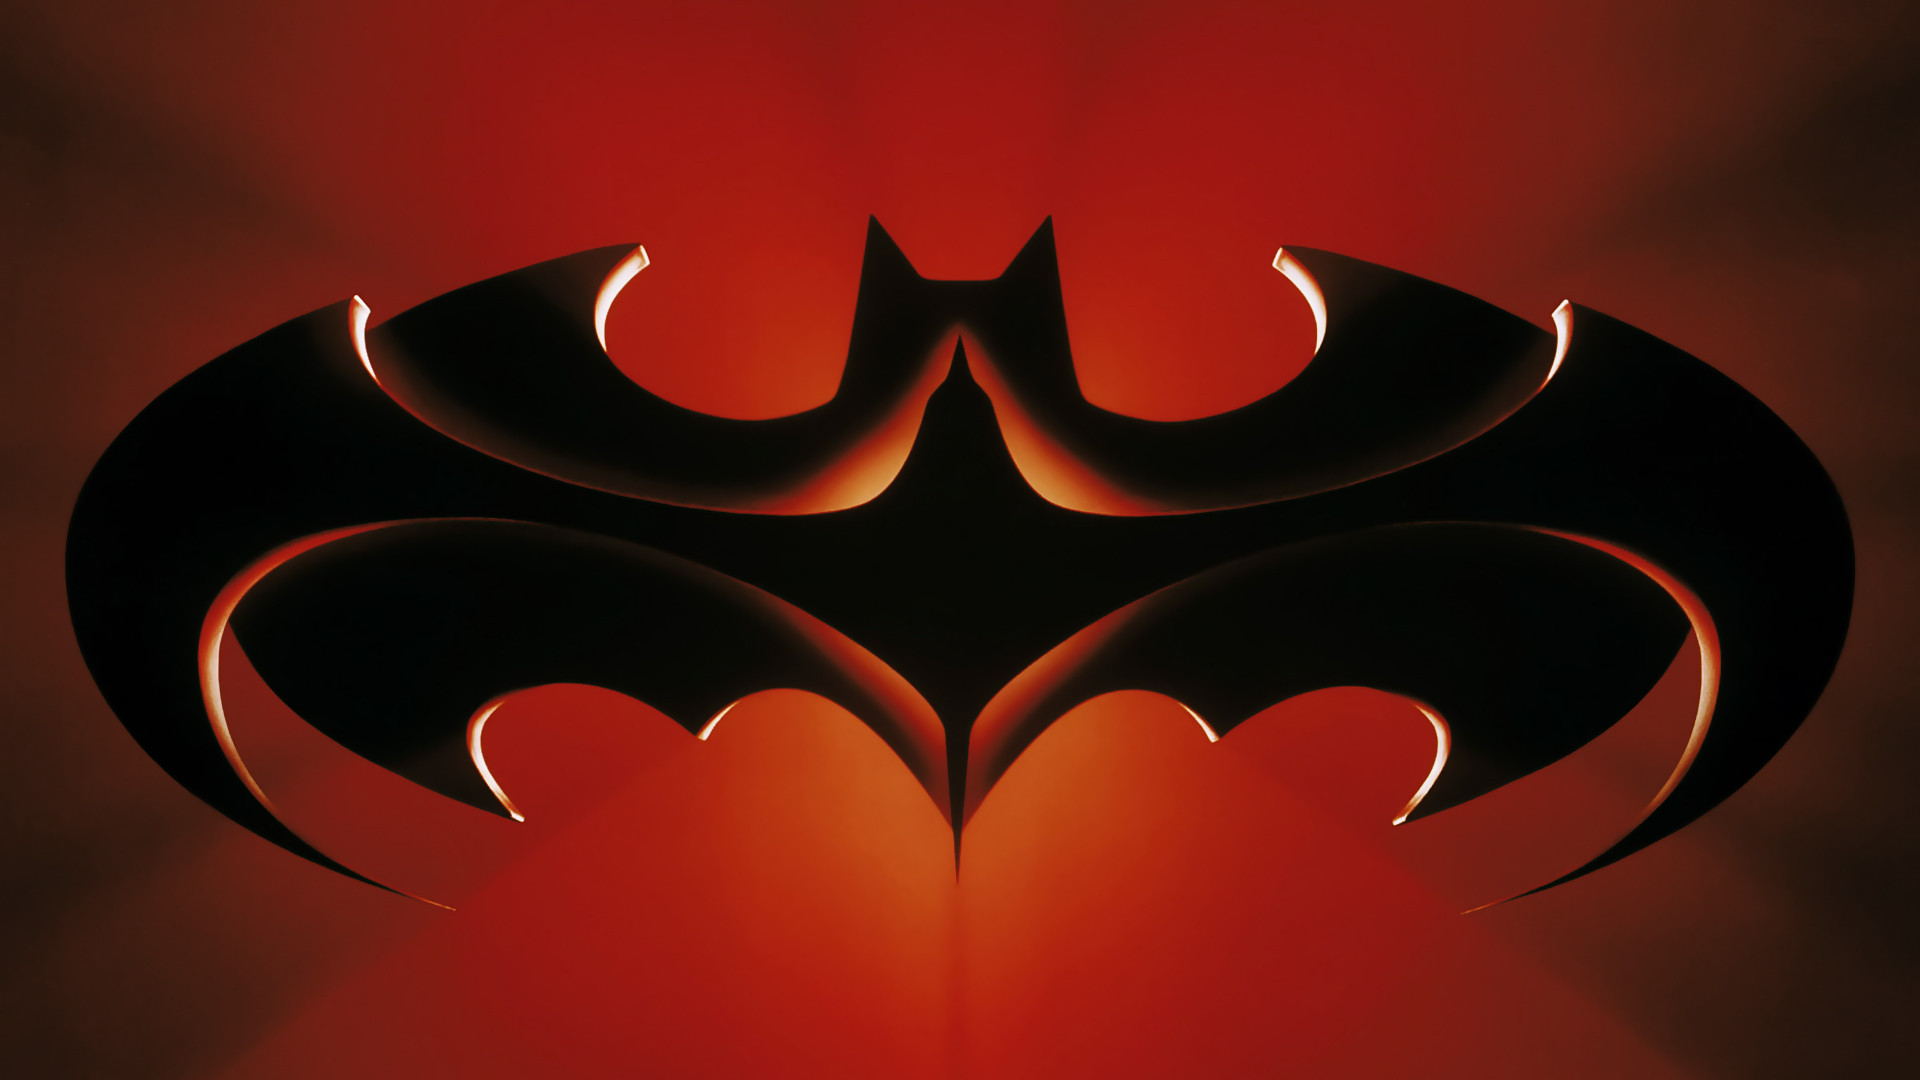 Скачать обои бесплатно Кино, Бэтмен, Логотип Бэтмена, Бэтмен И Робин картинка на рабочий стол ПК